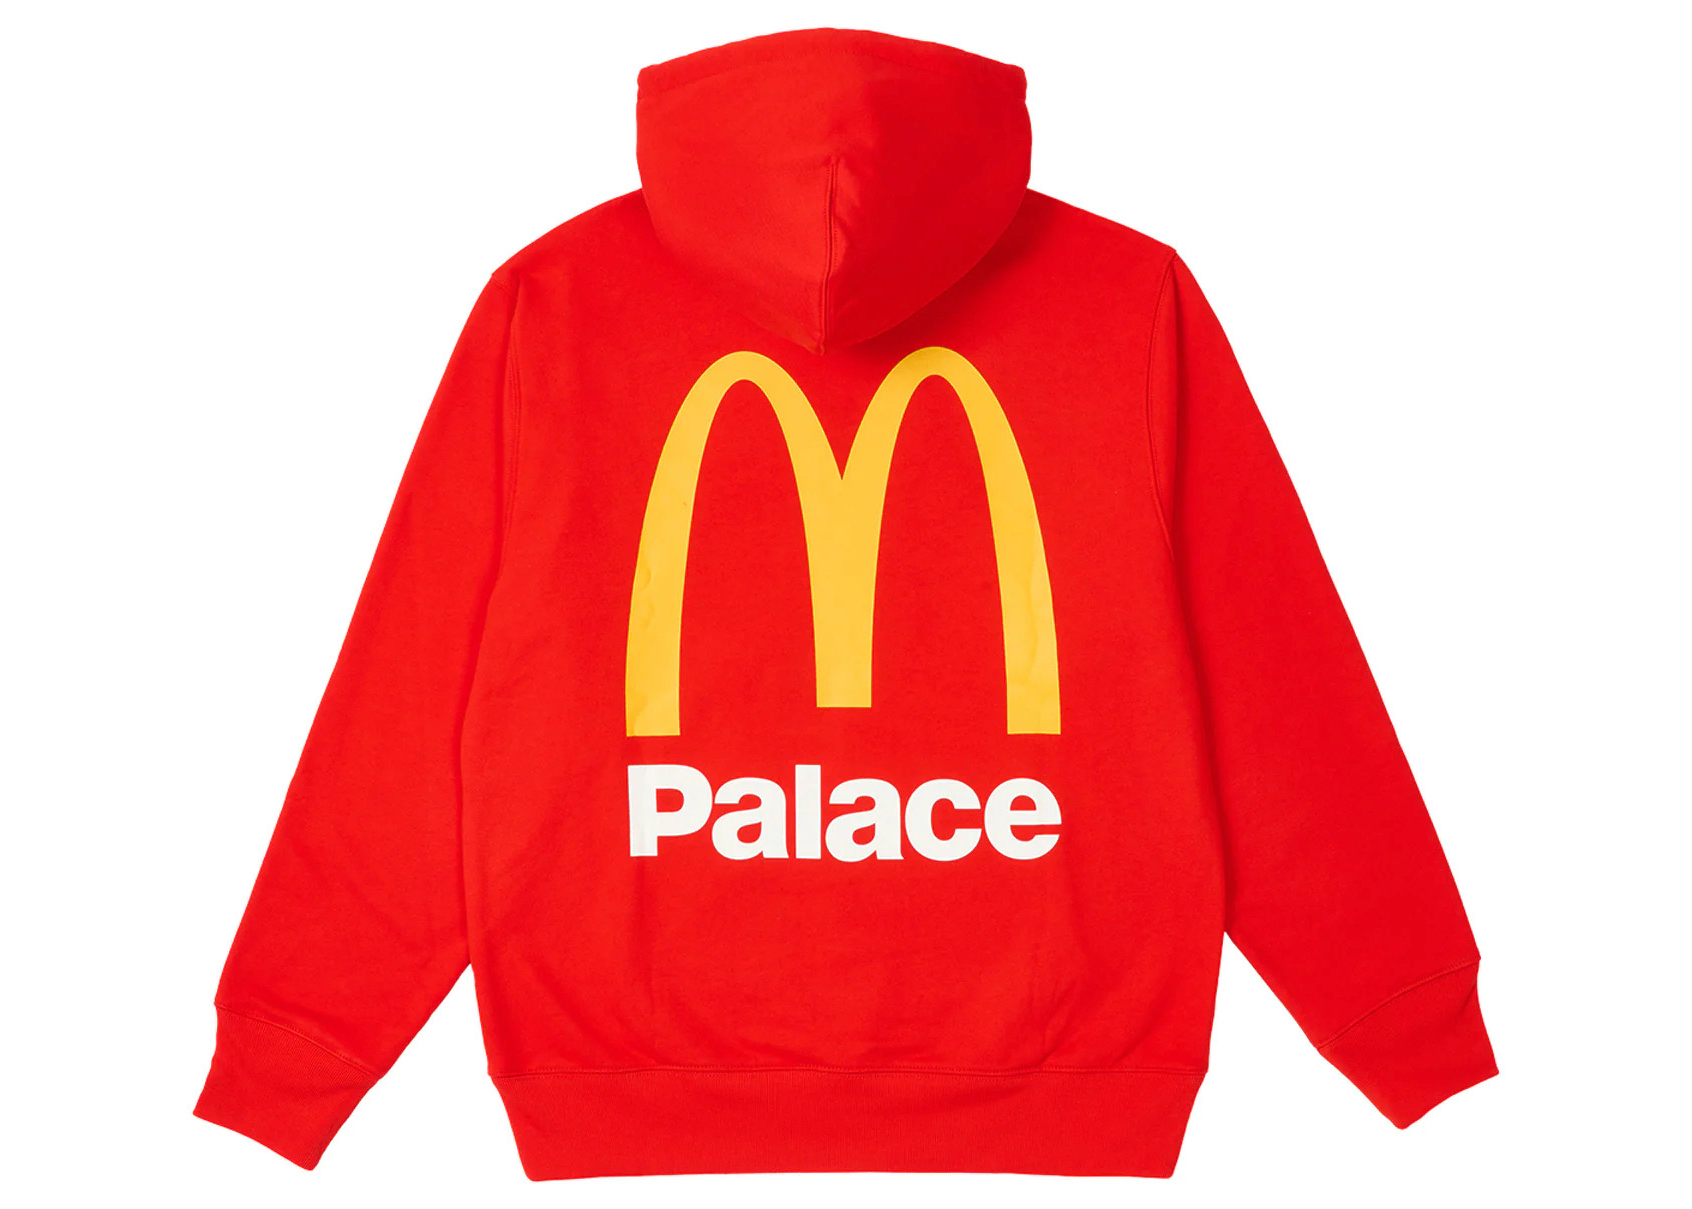 Palace x McDonald's Logo Hood Black Men's - FW23 - US